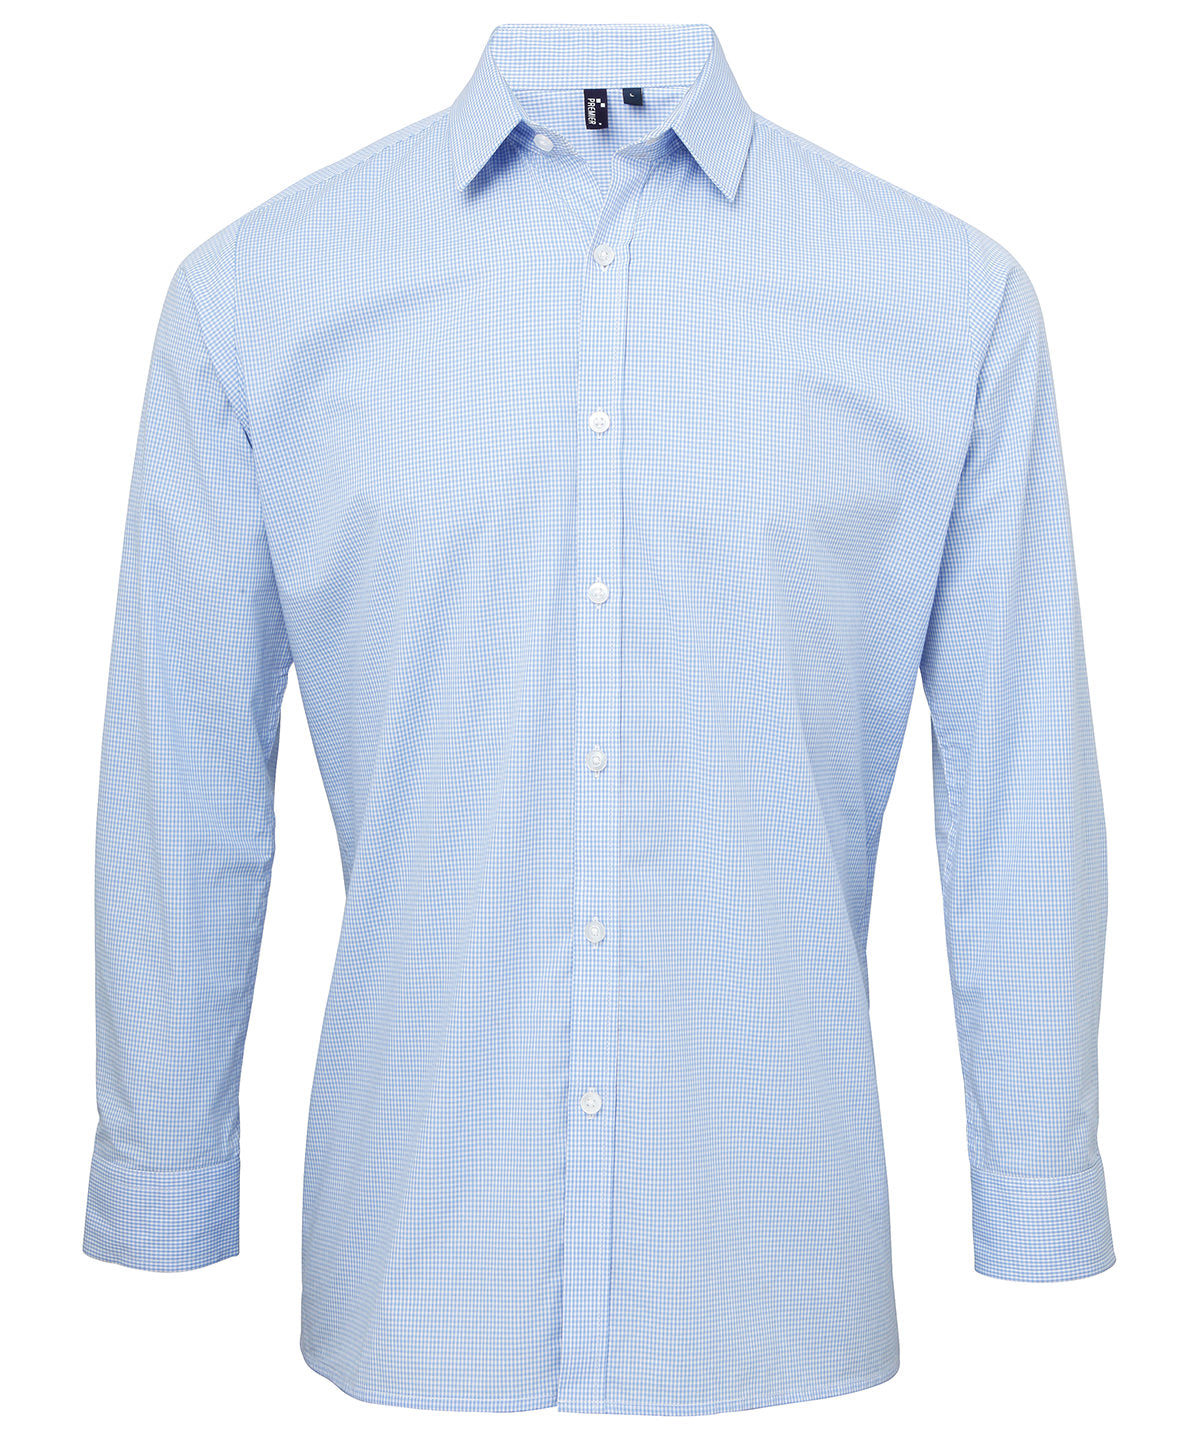 Microcheck (Gingham) Long Sleeve Cotton Shirt